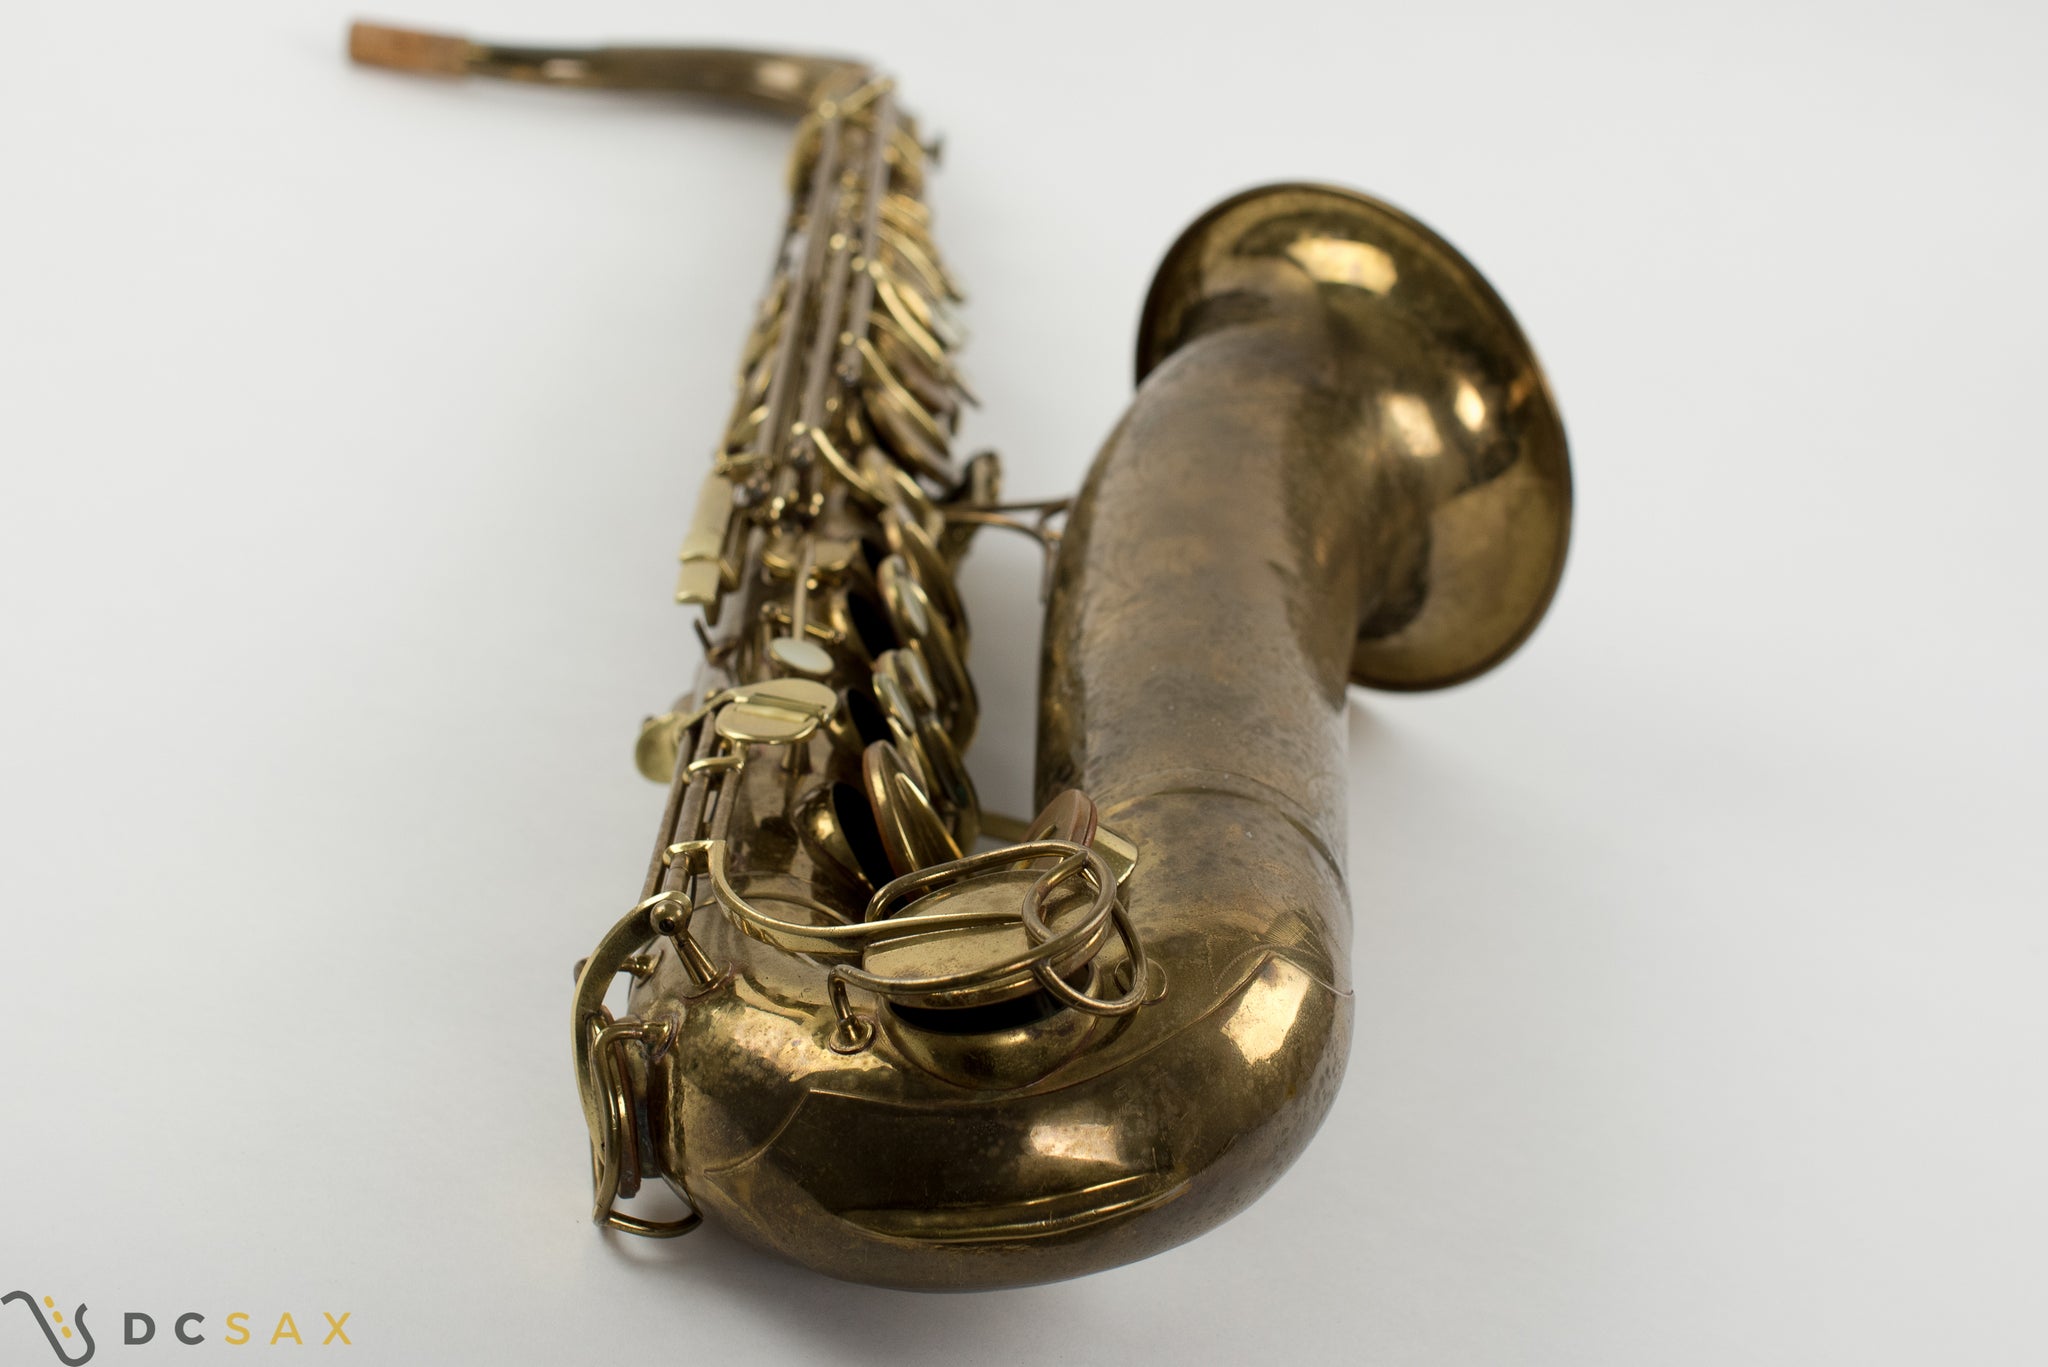 1948 Martin Committee Tenor Saxophone, "The Martin"